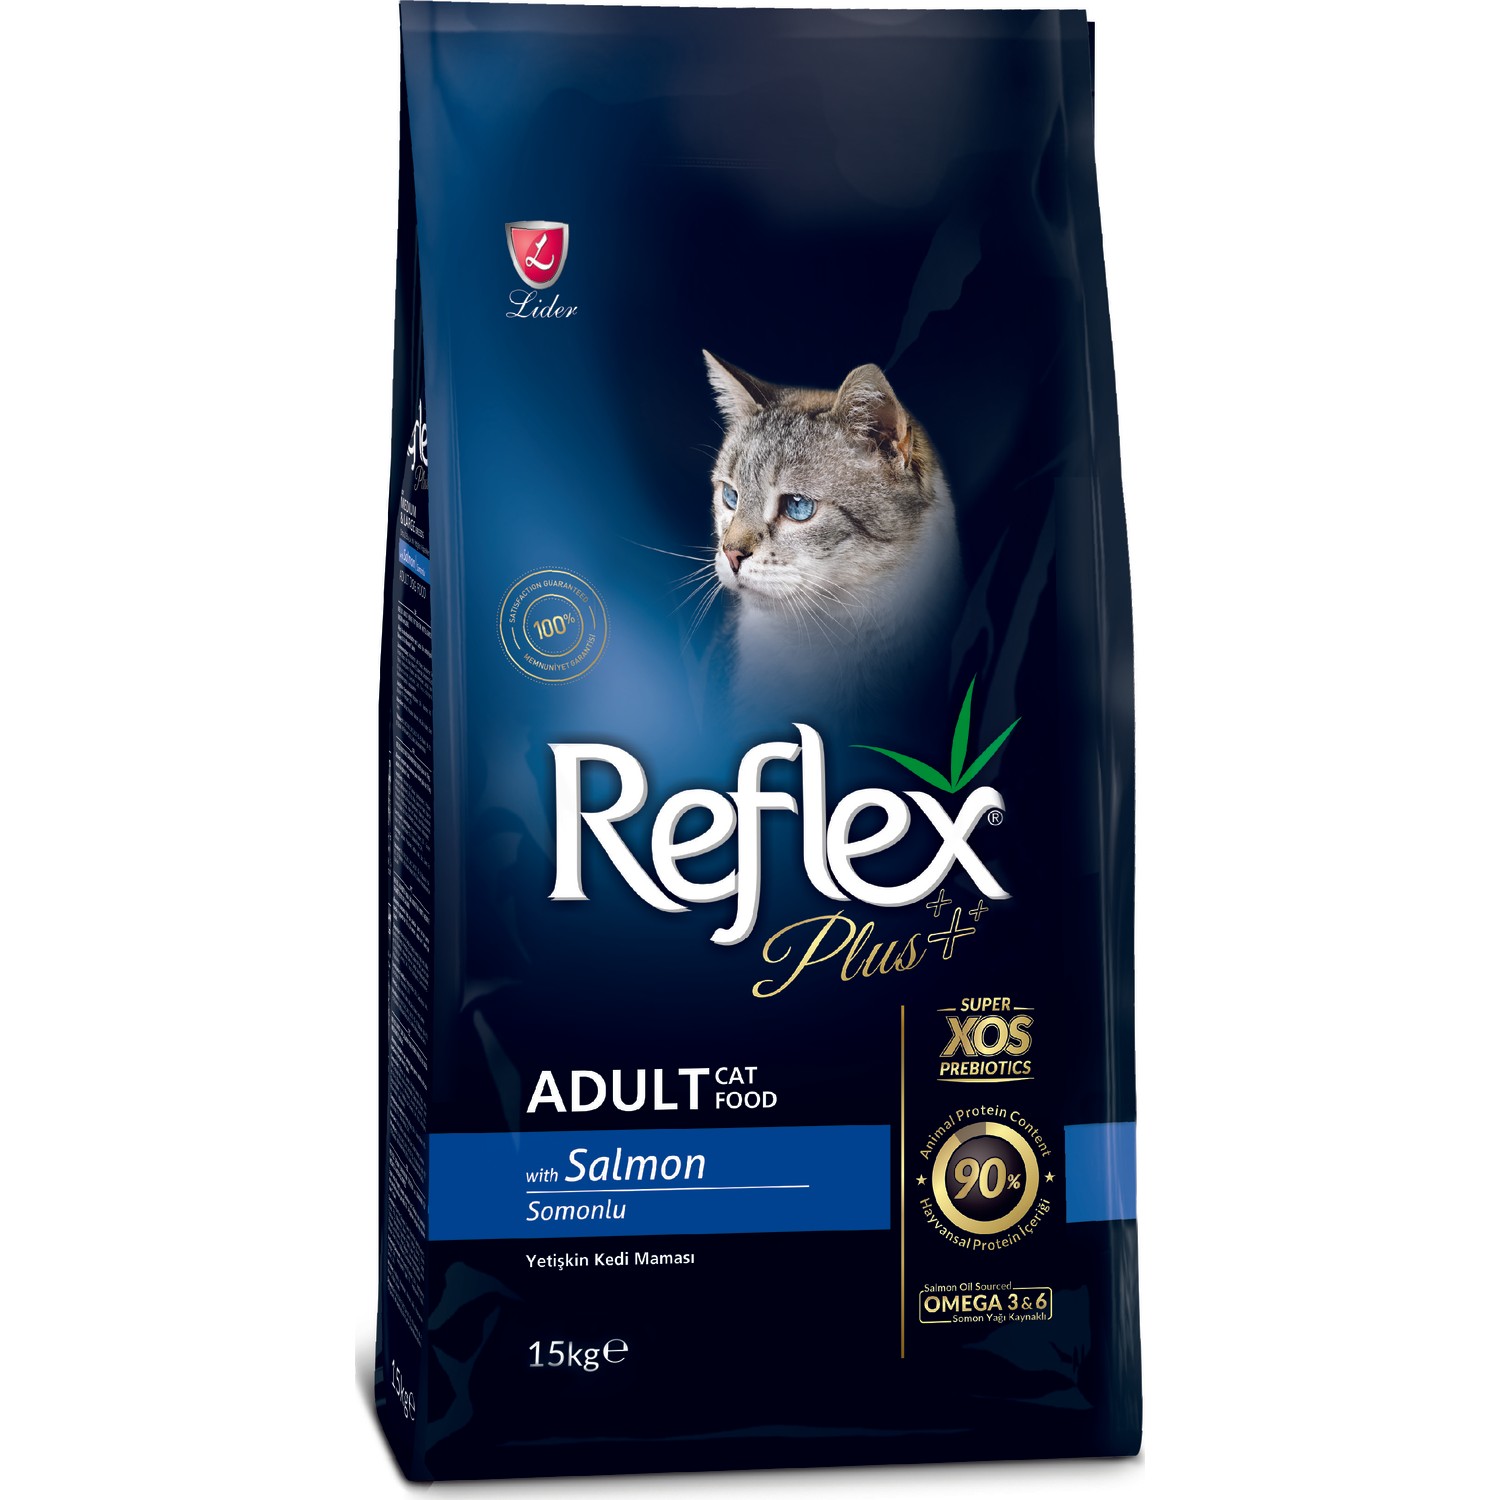 Reflex Plus Somonlu Yetişkin Kedi Maması 15 Kg Fiyatı